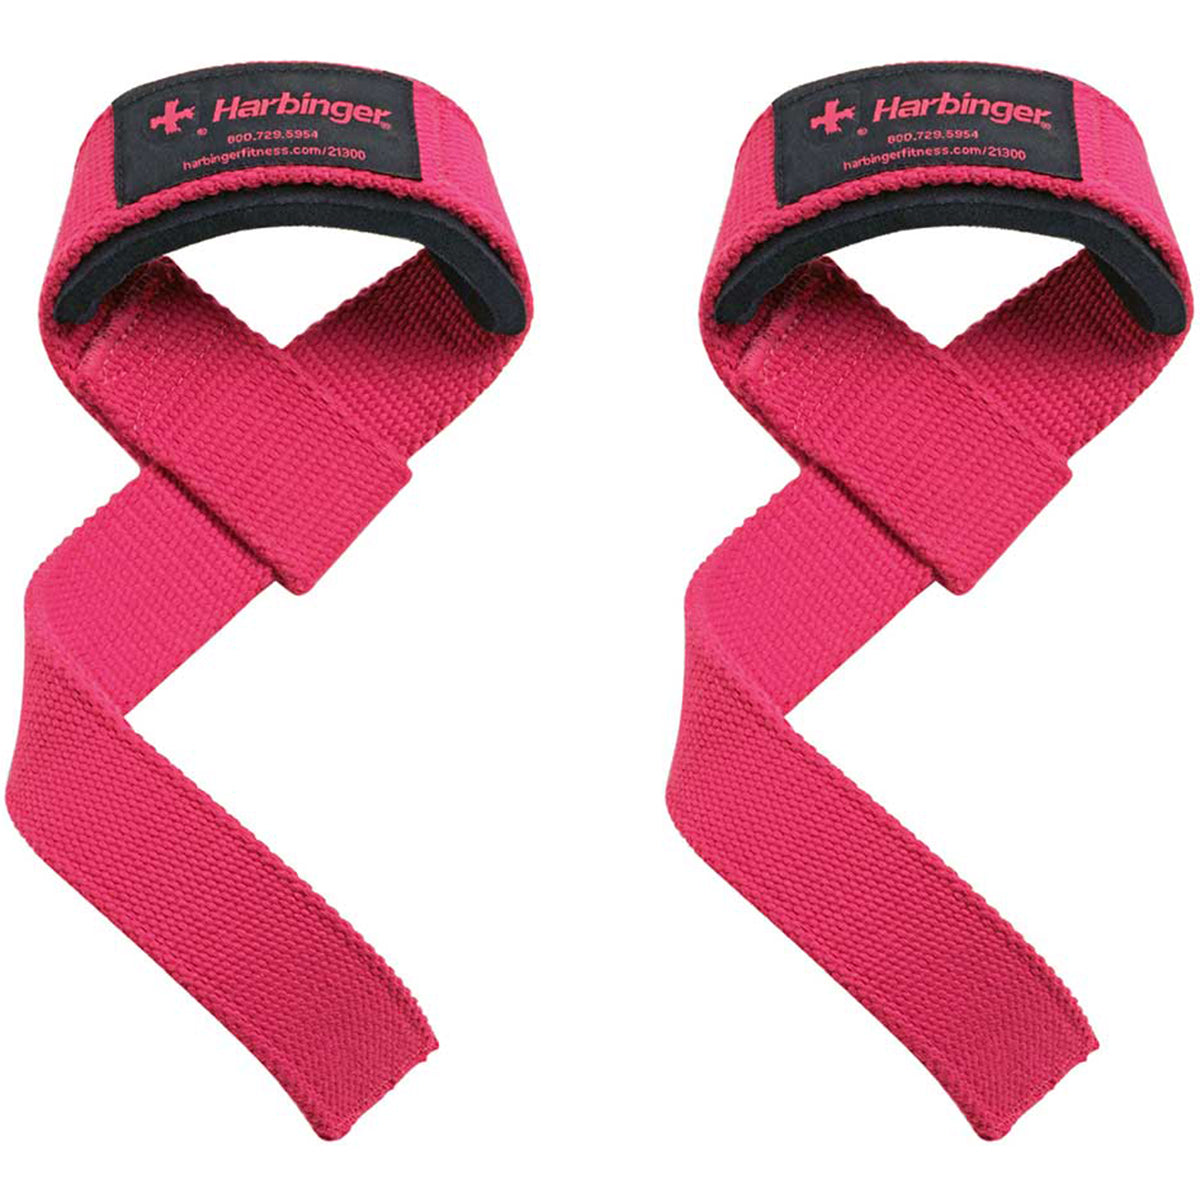 Harbinger Women's Padded Cotton Weight Lifting Straps - Pink Harbinger